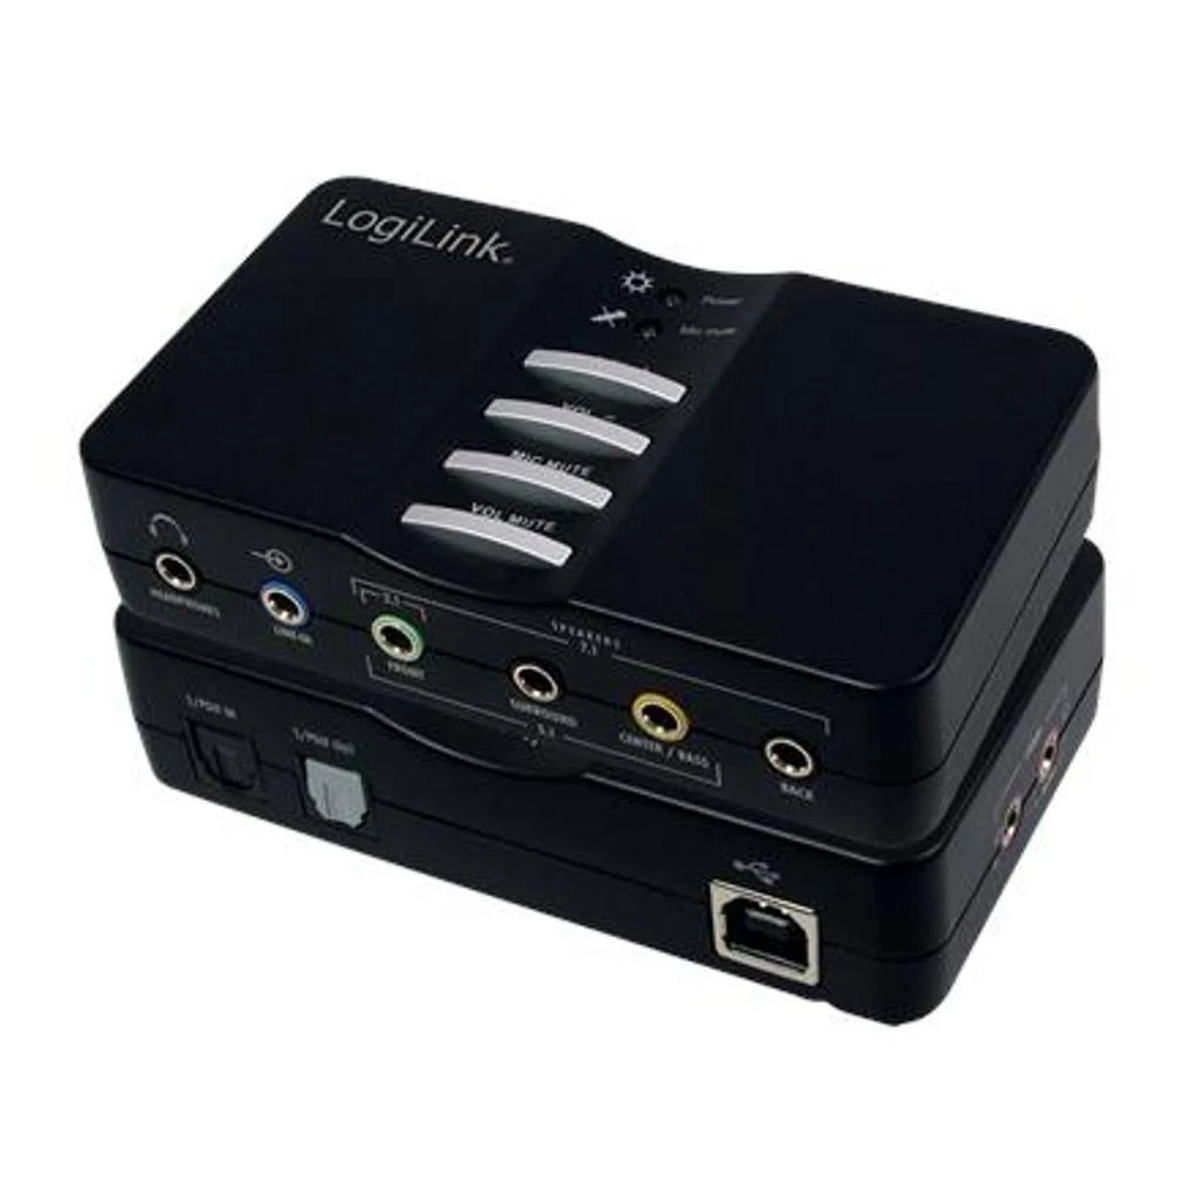 Soundbox 7.1 Soundkarte LOGILINK 7.1, Soundkarte USB LogiLink